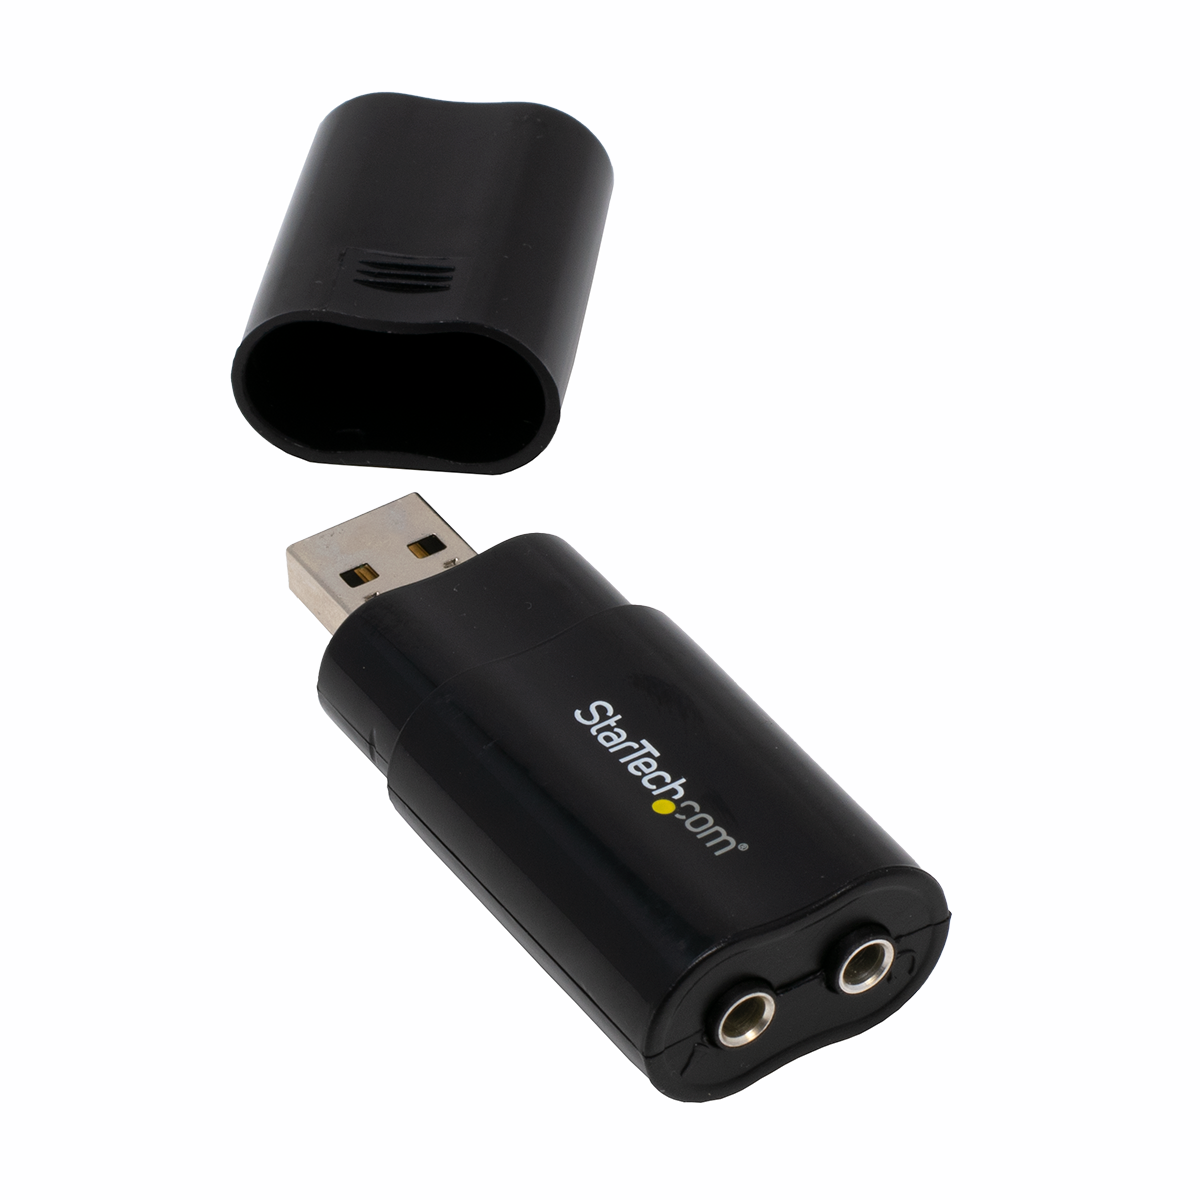 USB Handset Dongle